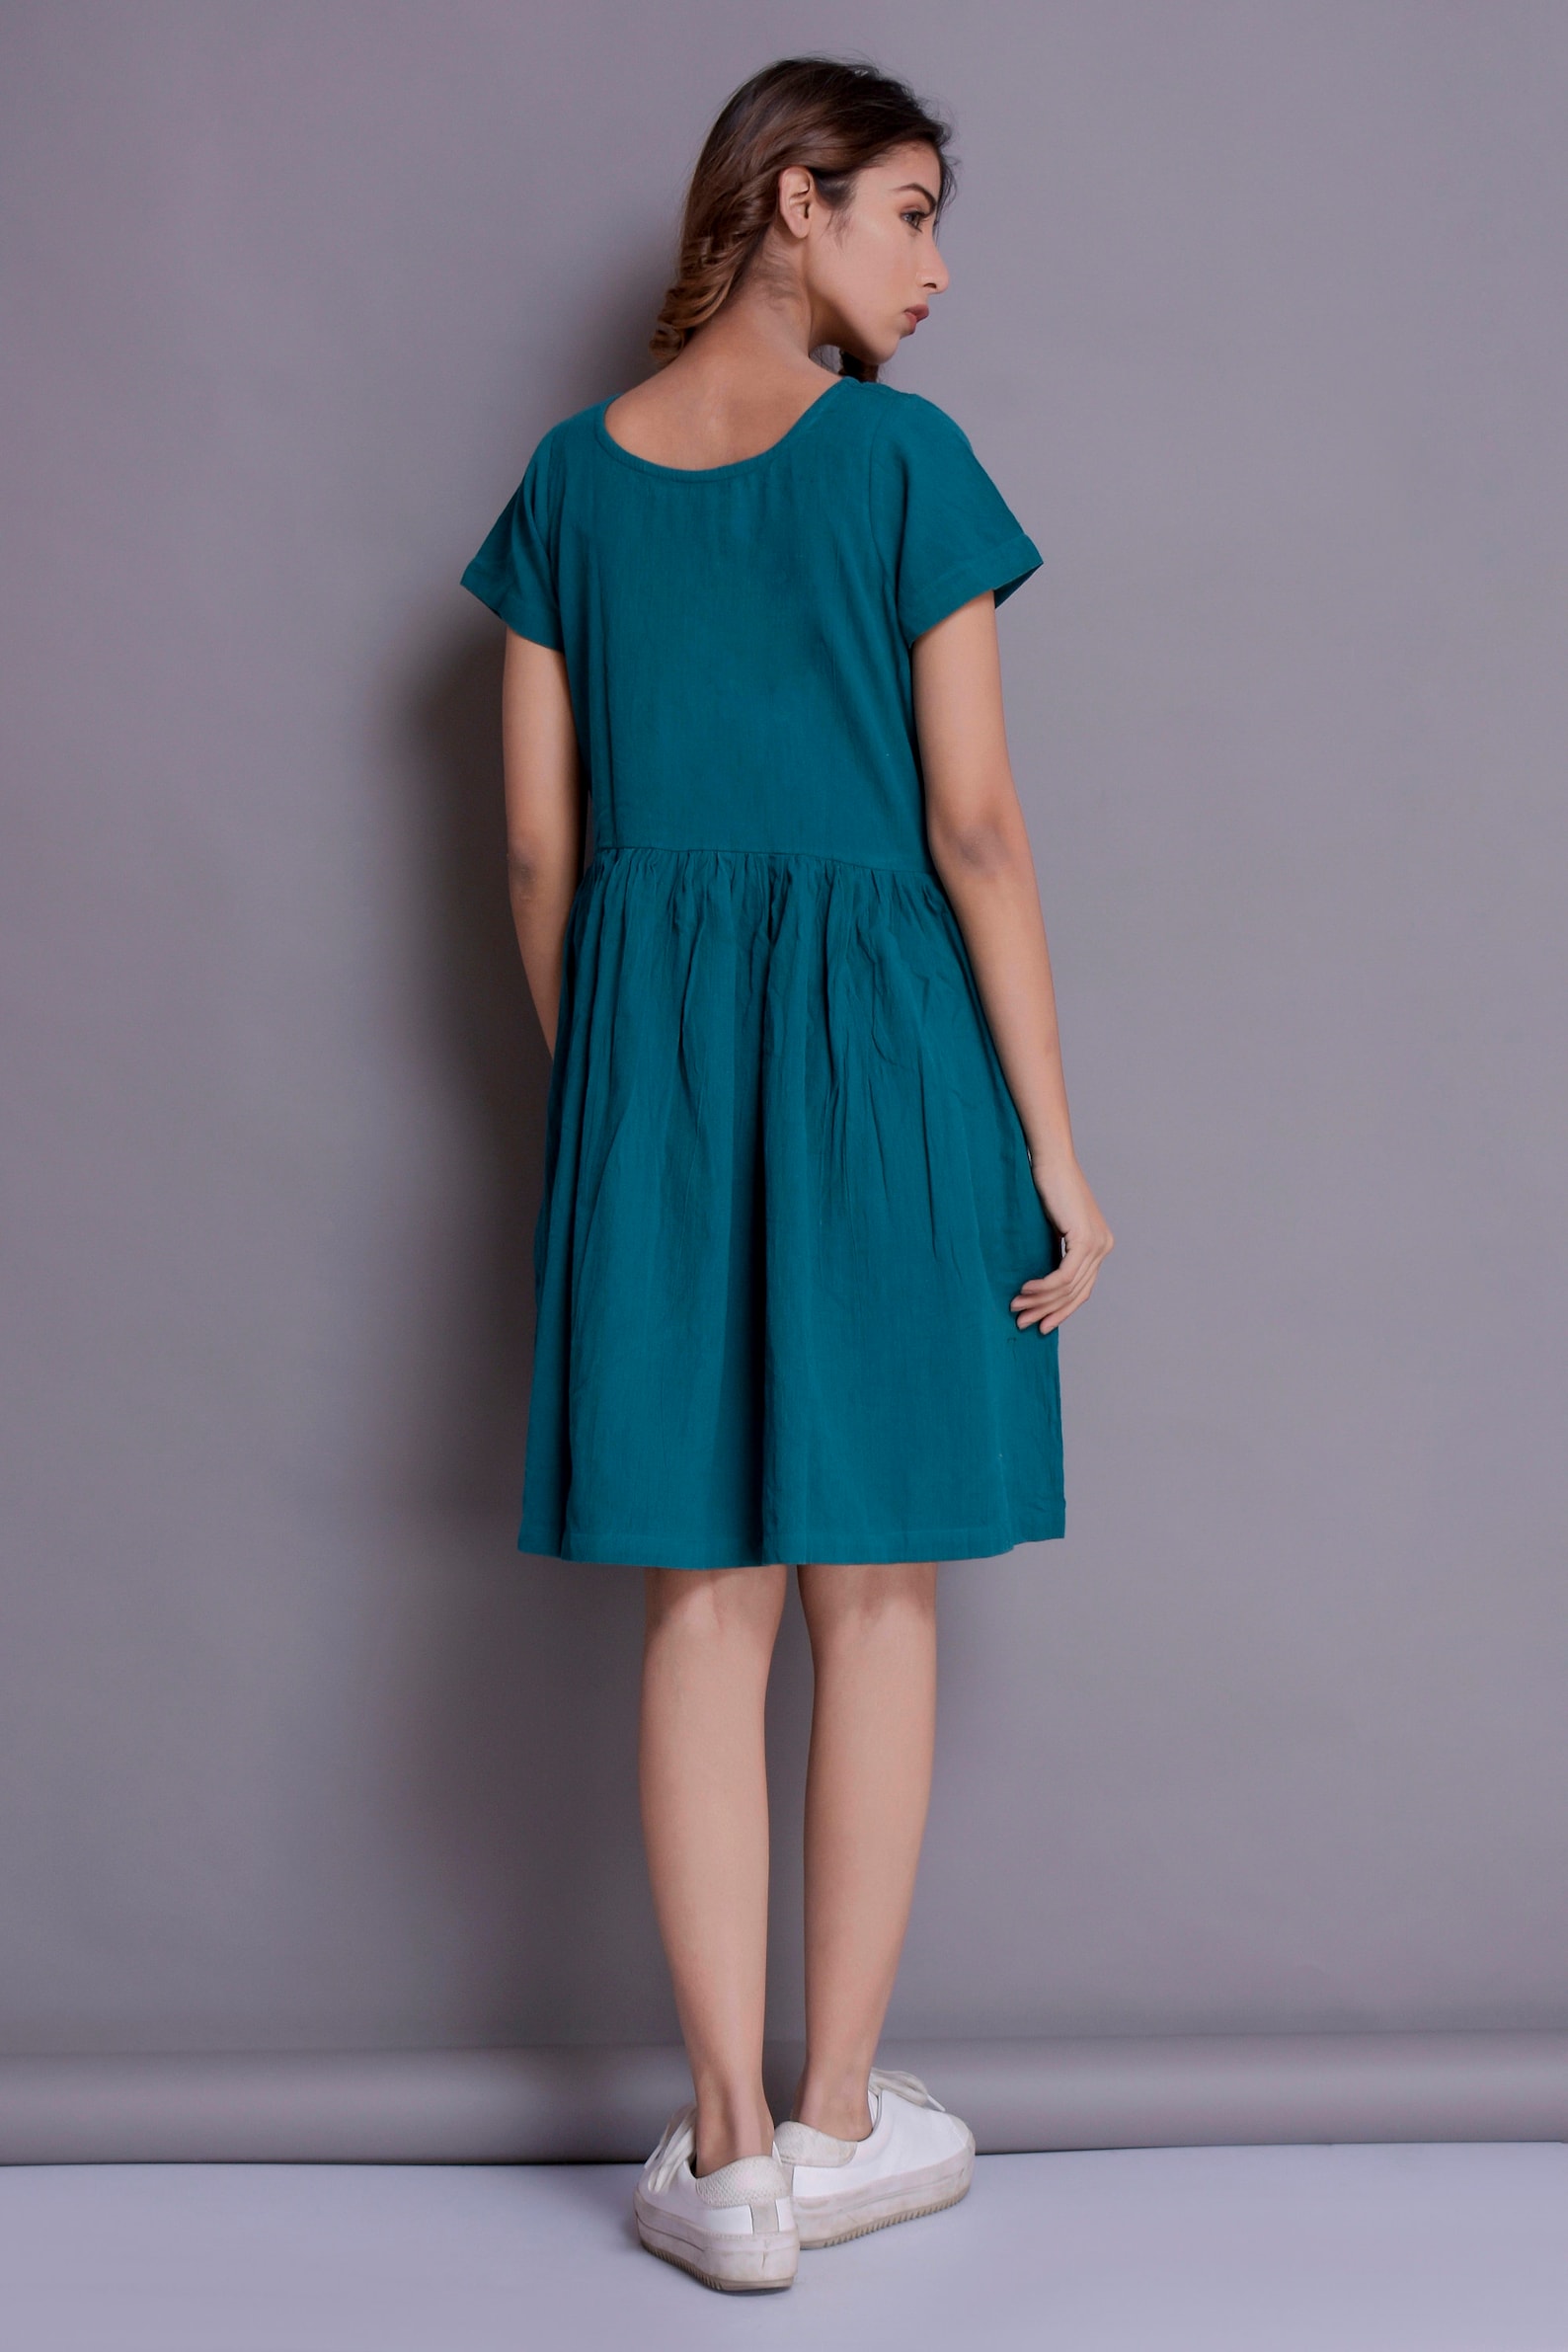 Short sleeved Dress Teal Linen dress Summer dress Knee | Etsy